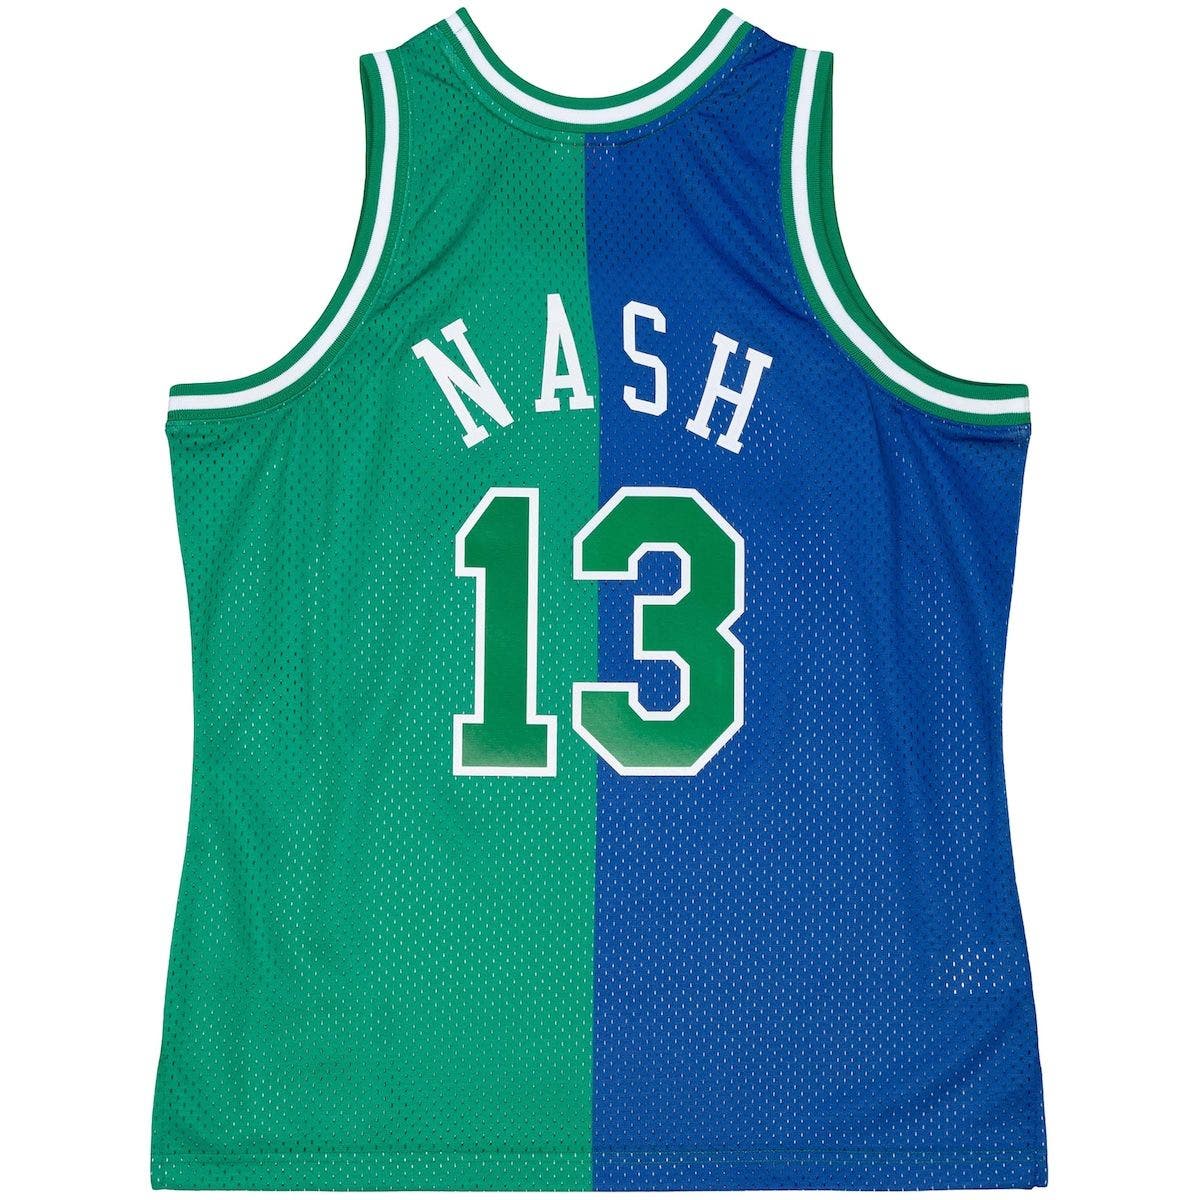 Authentic Steve Nash Dallas Mavericks 1998-99 Jersey - Shop